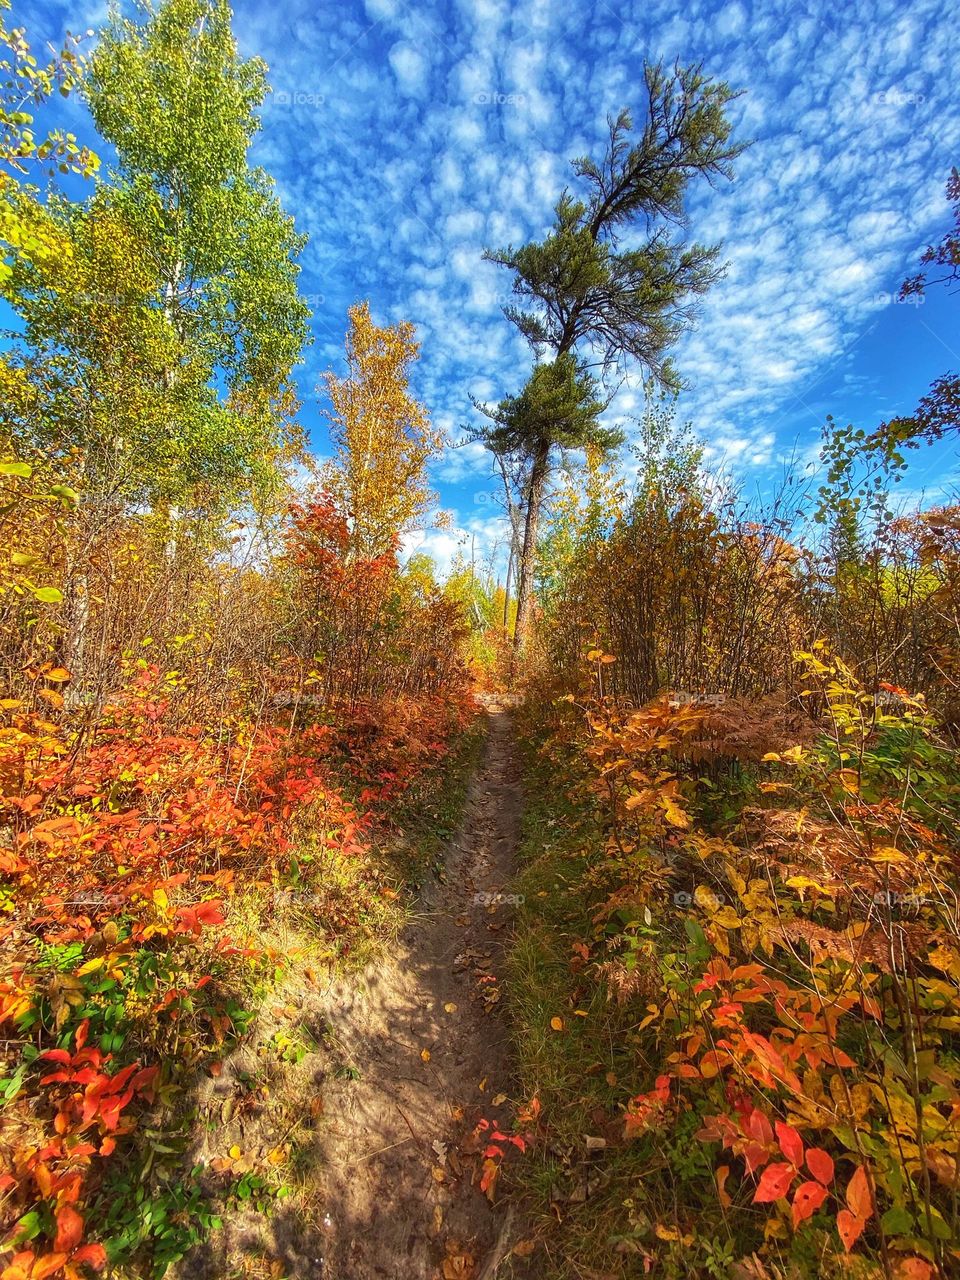 Hiking in the fall